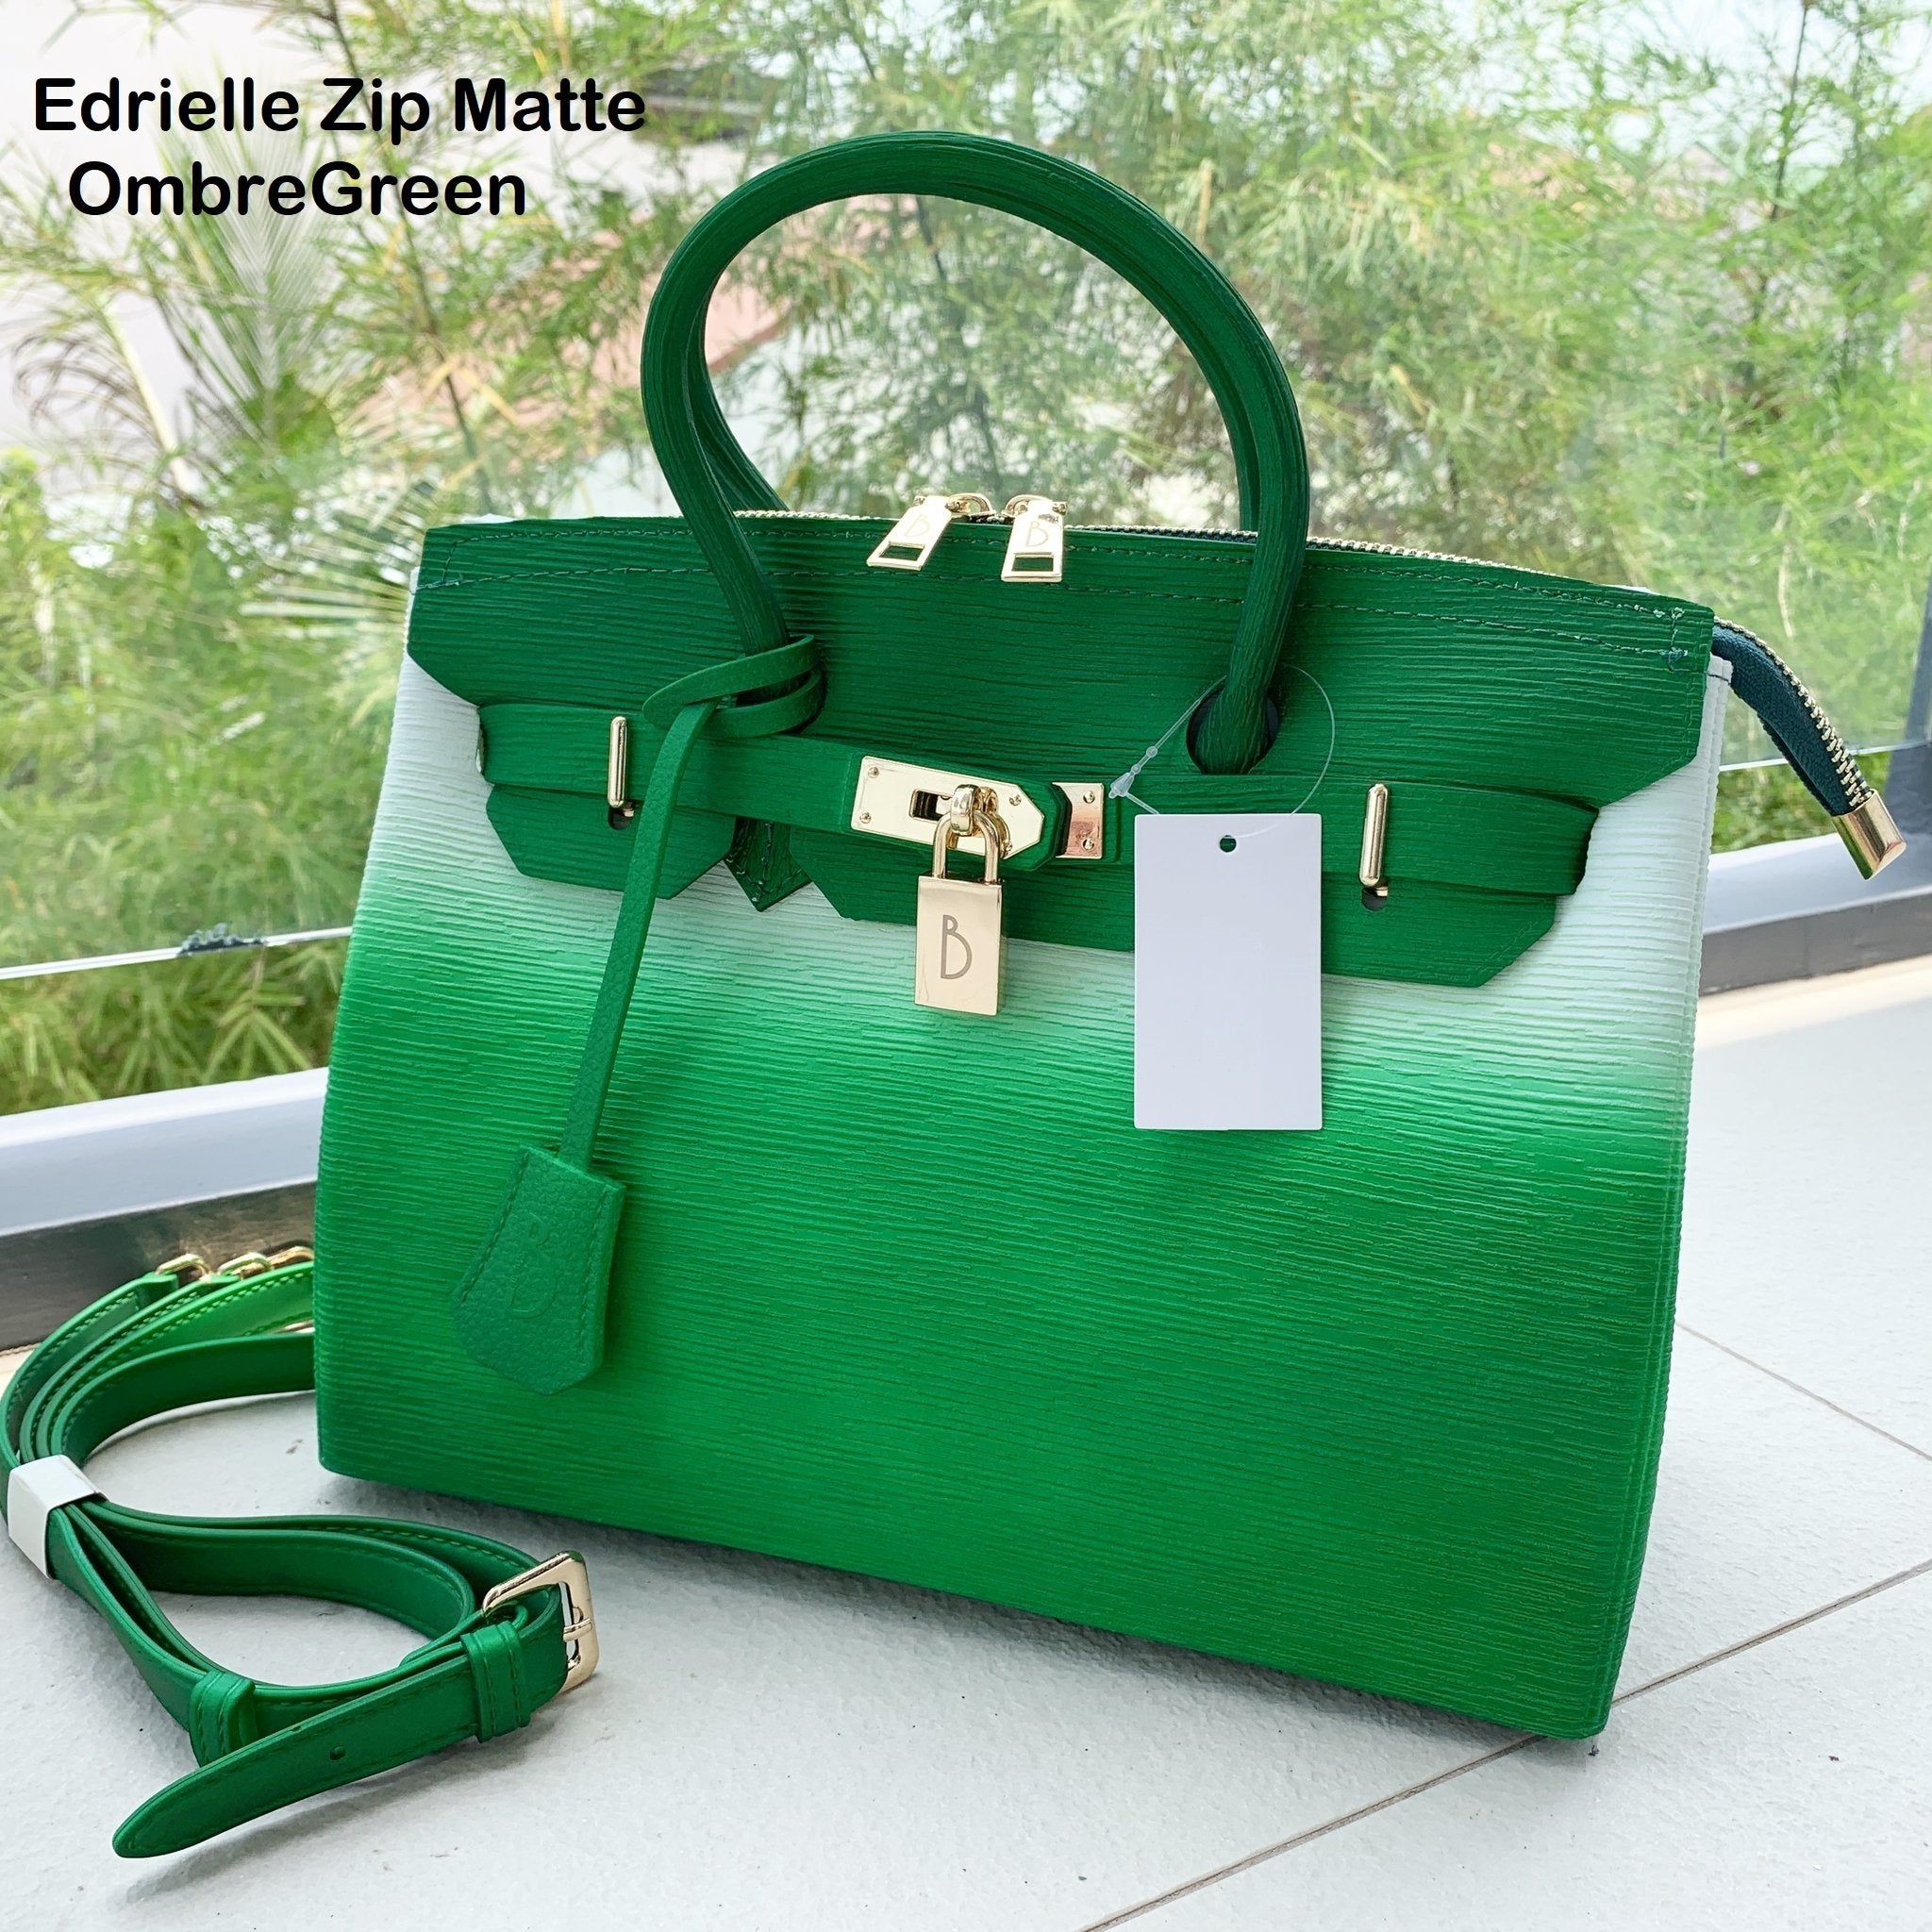 Green Hermes handbags